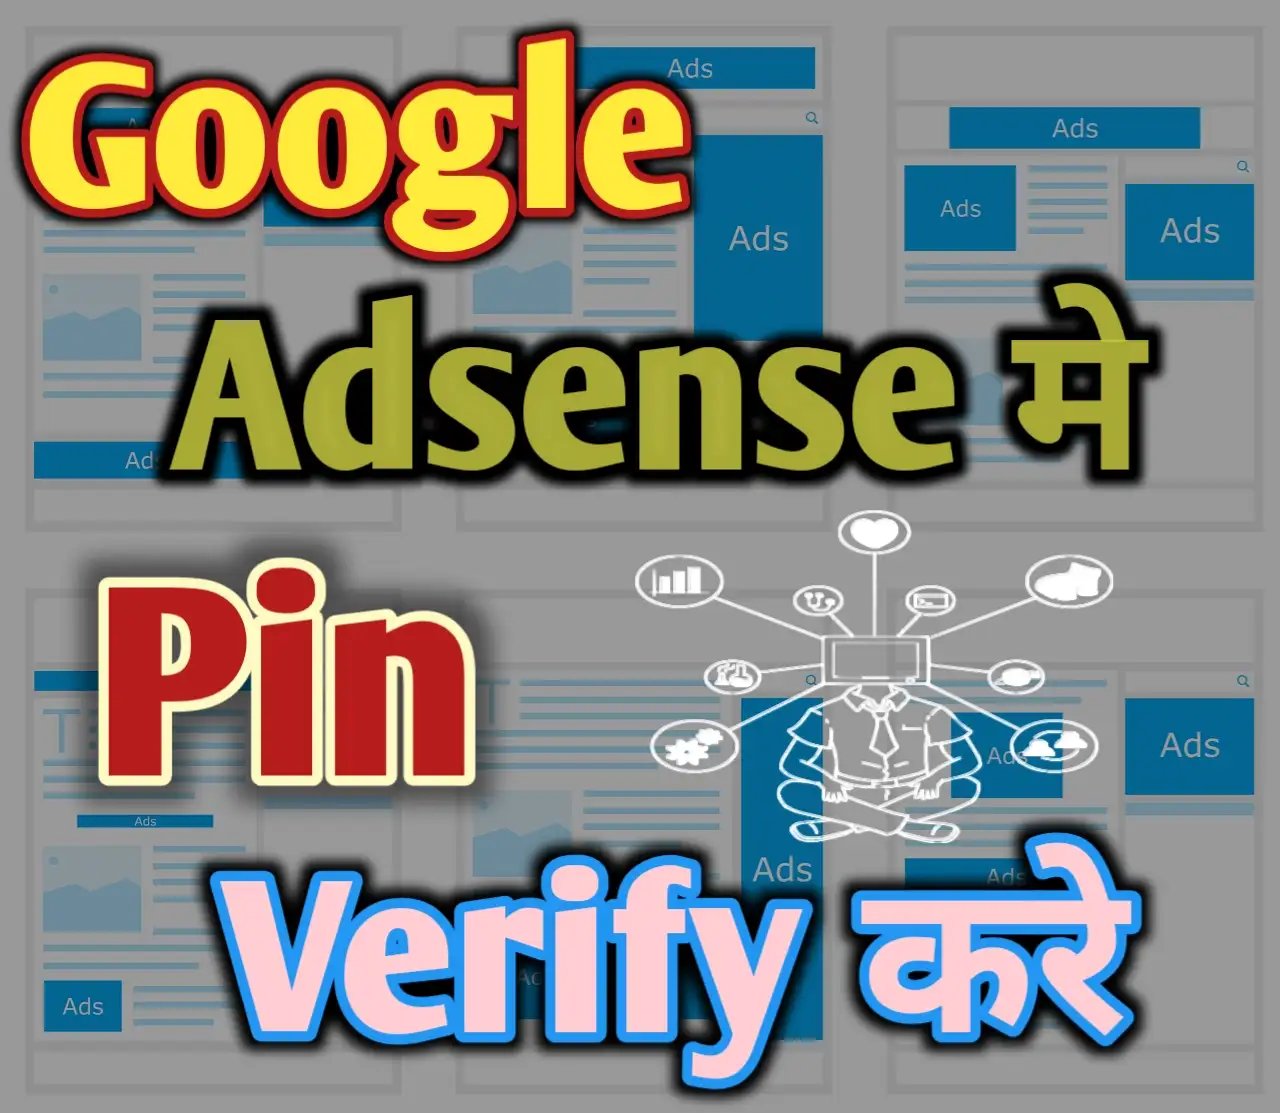 Google Adsense pin verify